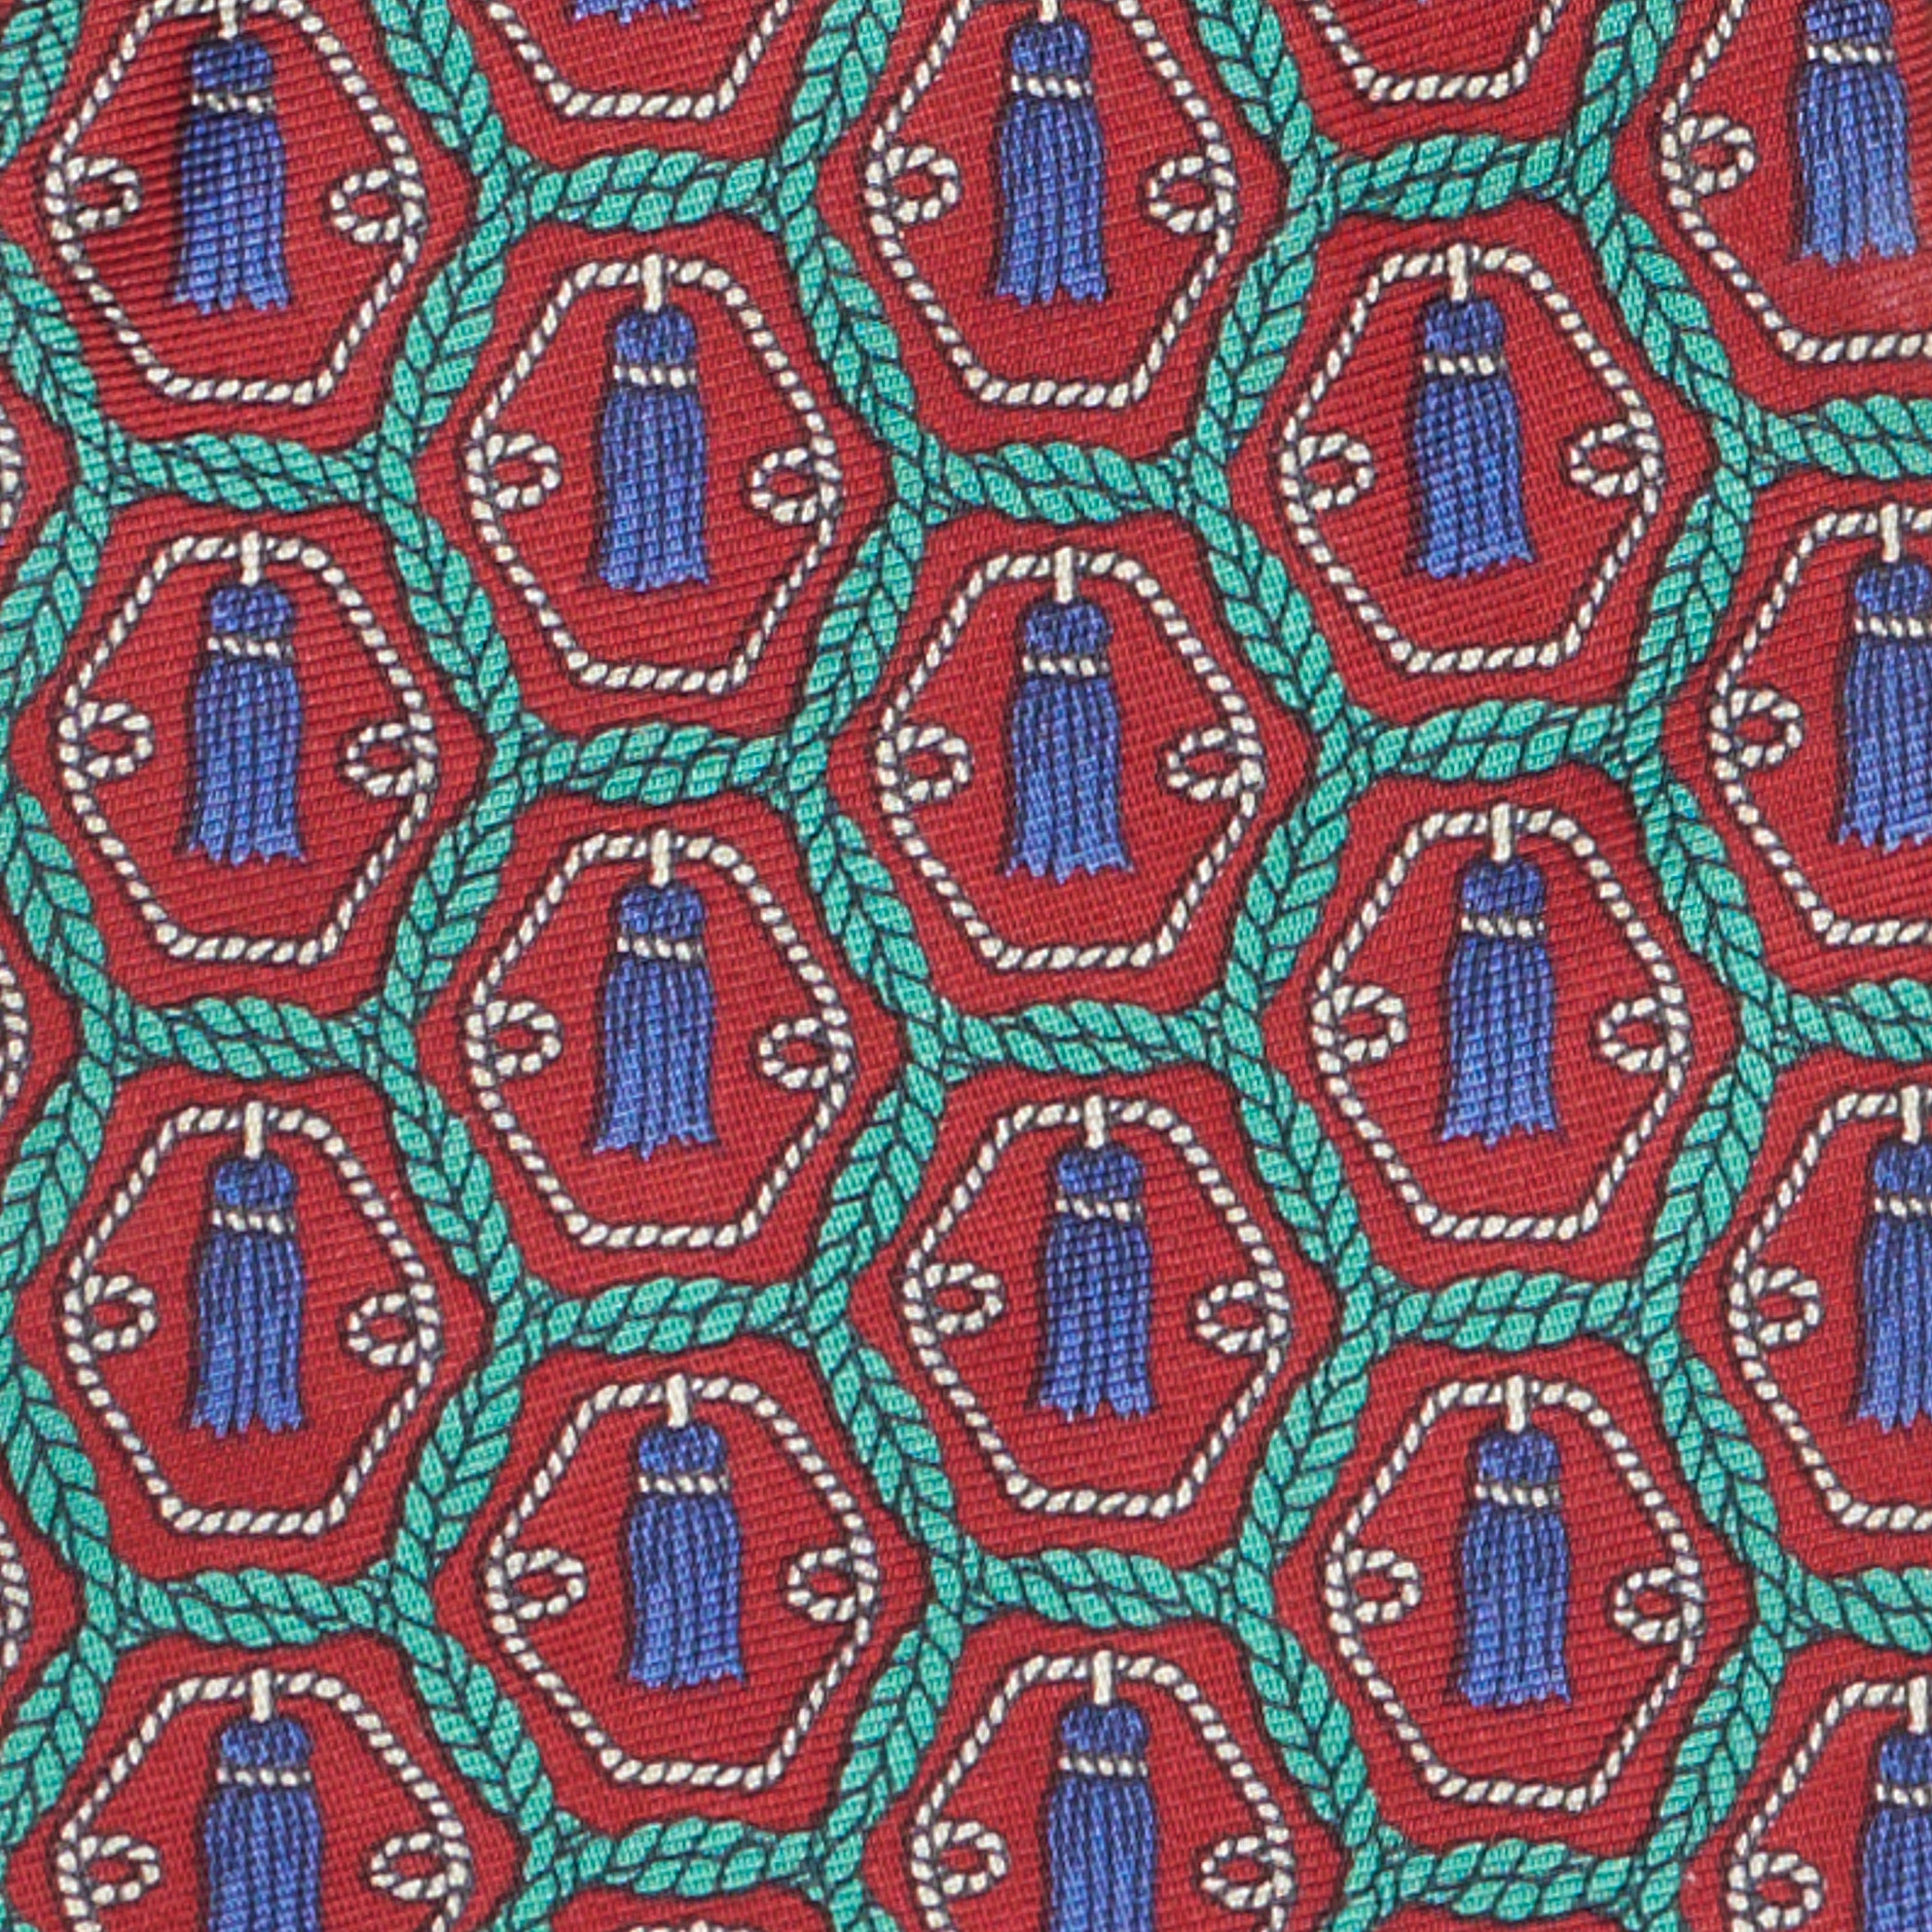 BOTTEGA VENETA Handmade Red Geometry Pattern Design Silk Tie BOTTEGA VENETA